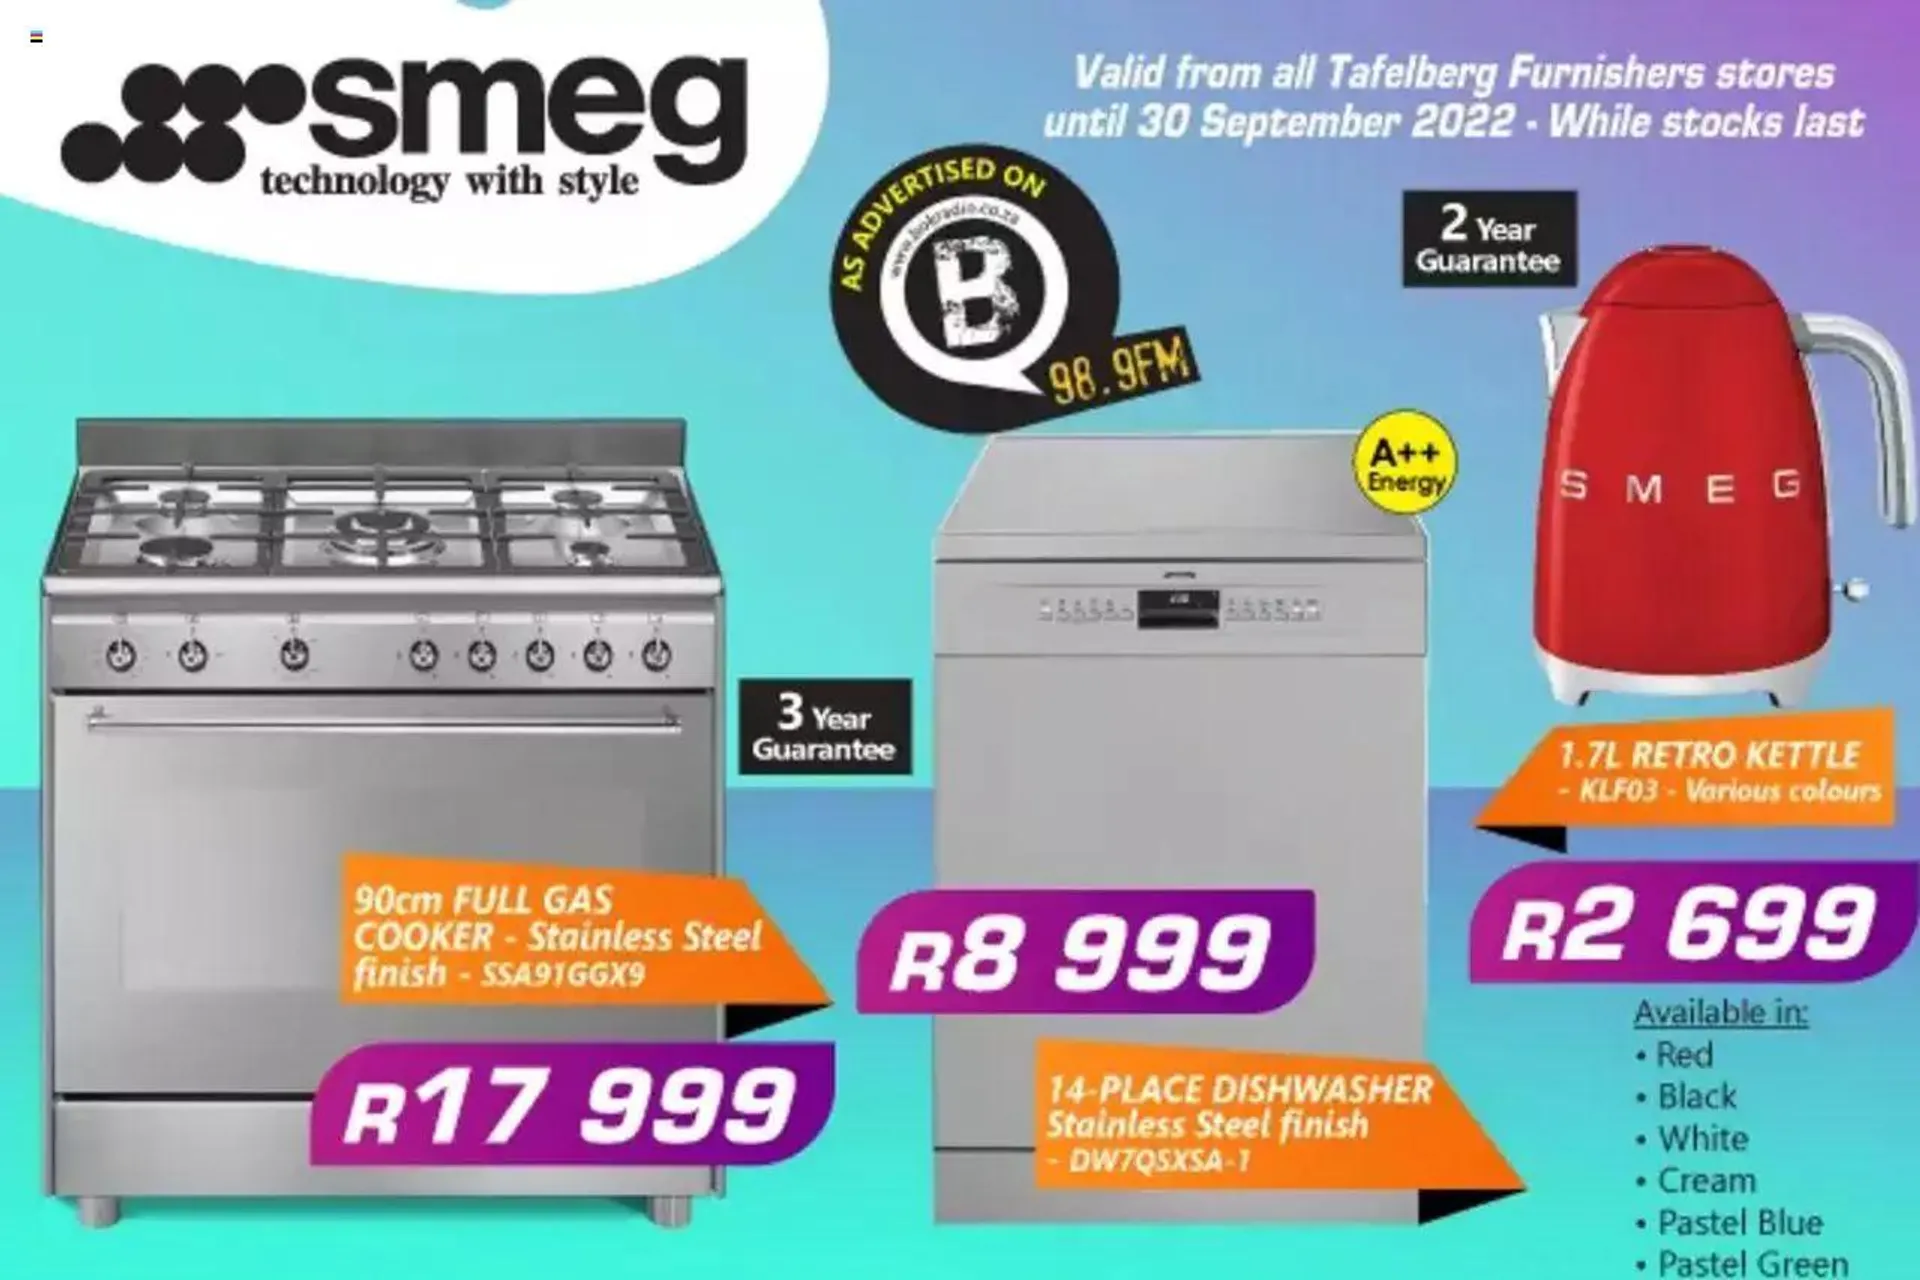 Tafelberg Furnishers - Smeg Appliances - 0